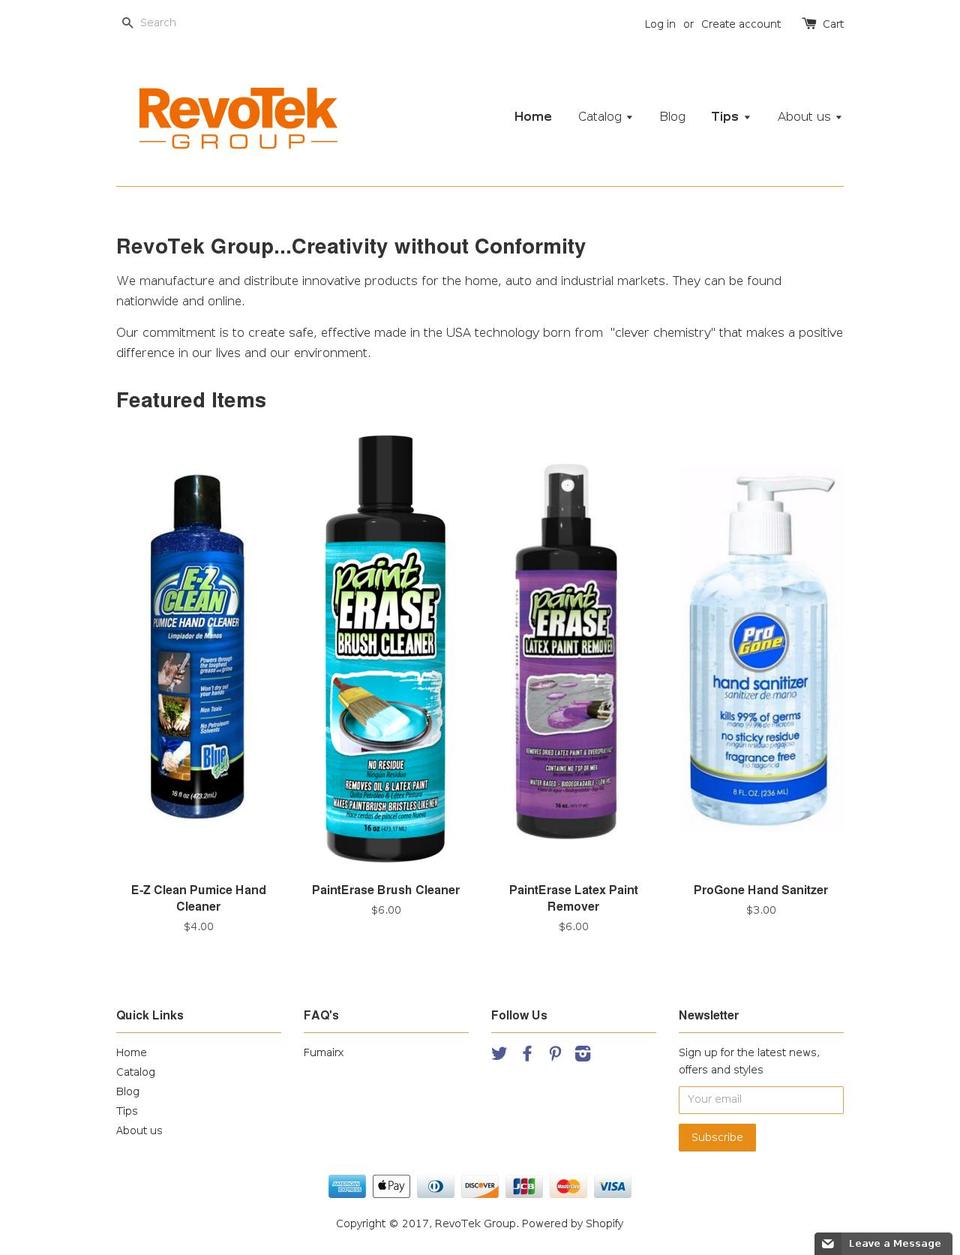 revotekproducts.info shopify website screenshot